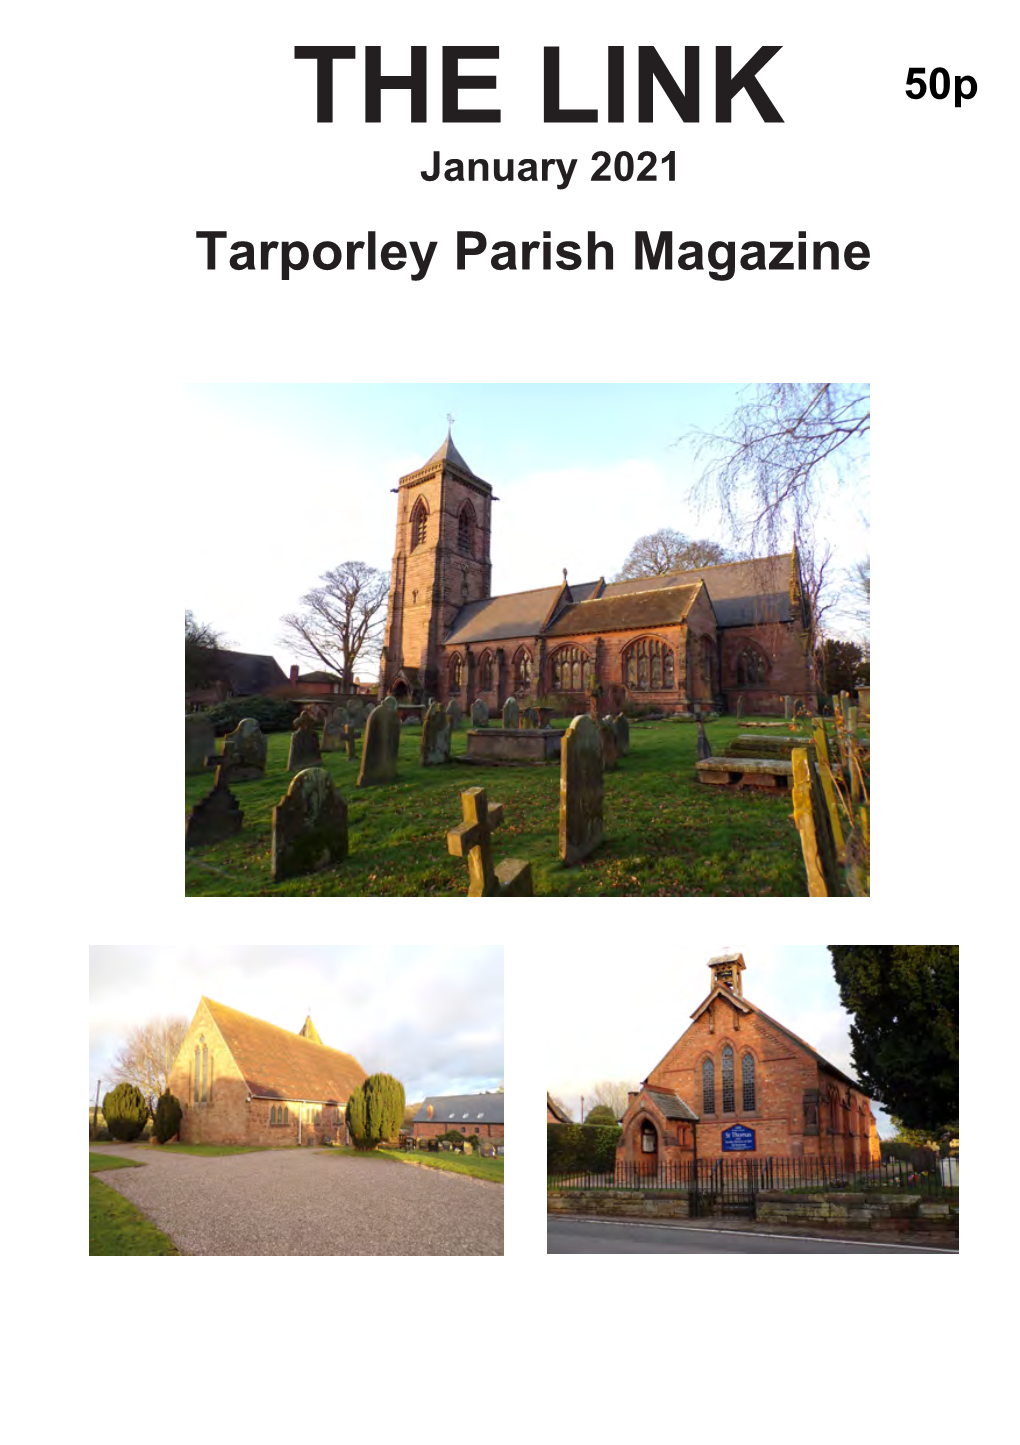 THE LINK 50P January 2021 Tarporley Parish Magazine Page 2 ANDREW P